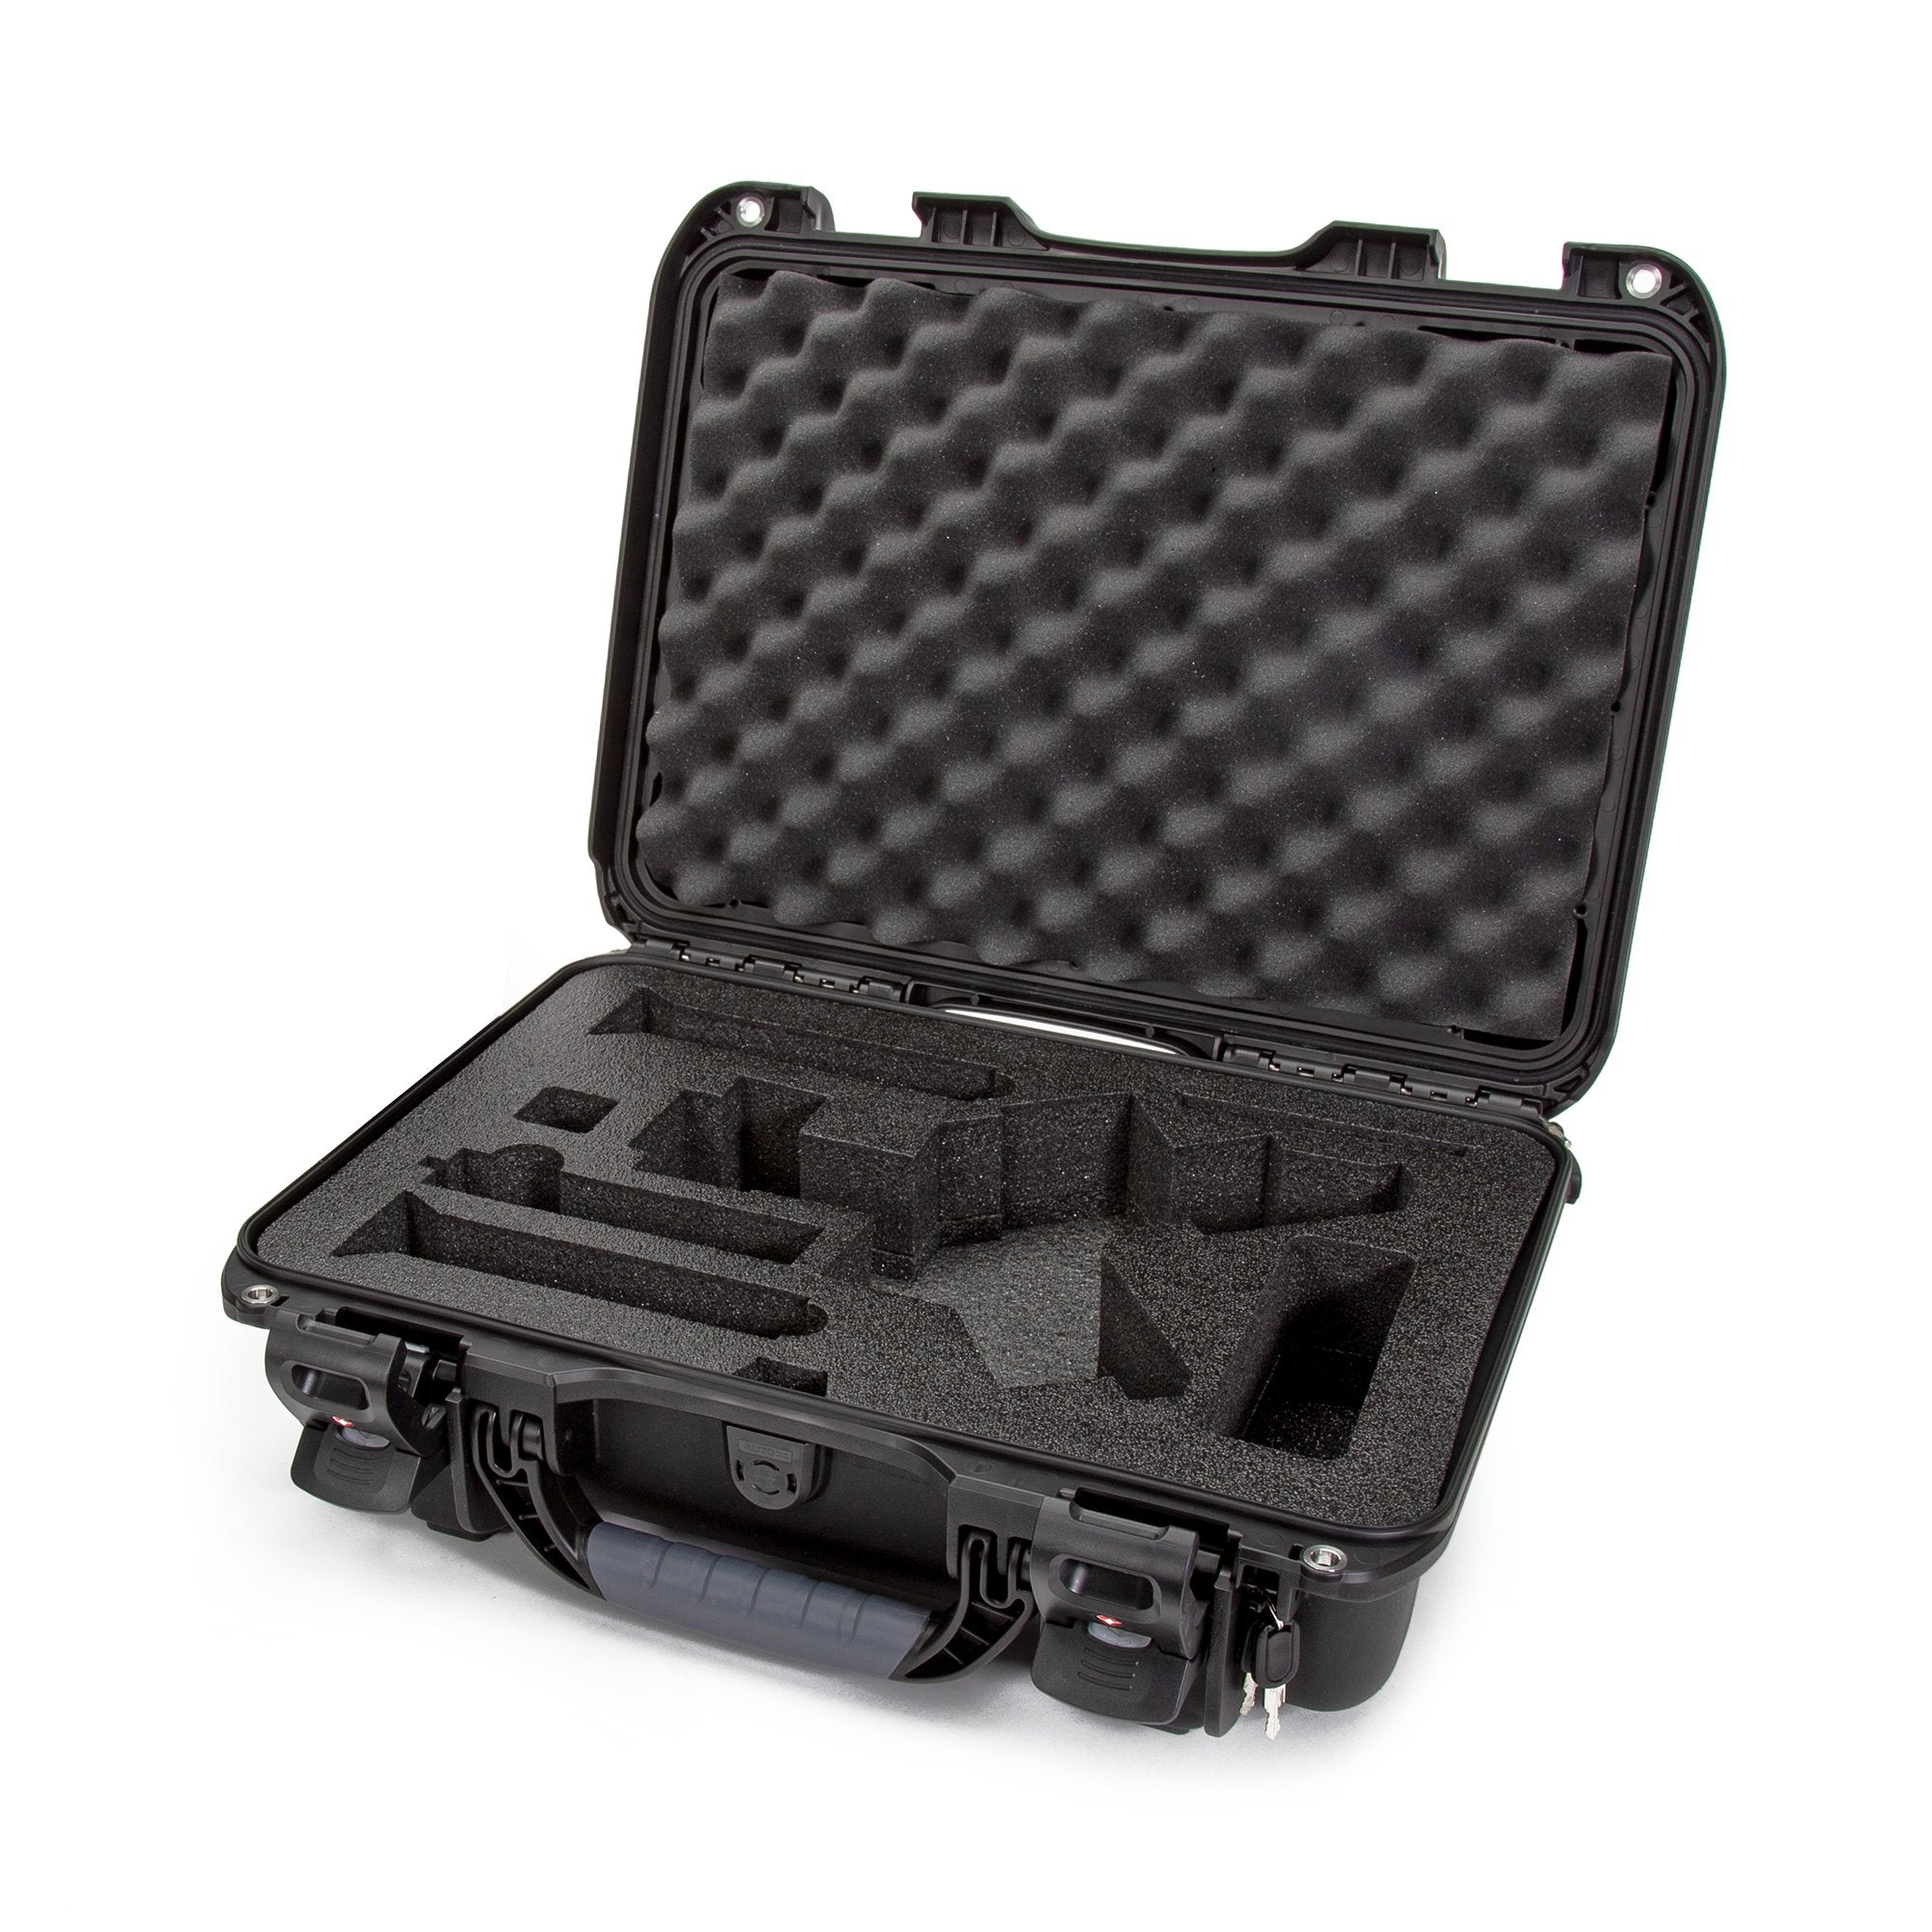 Nanuk 923 Waterproof Hard Case with Custom Foam Insert for Ronin-S Gimbal - Black